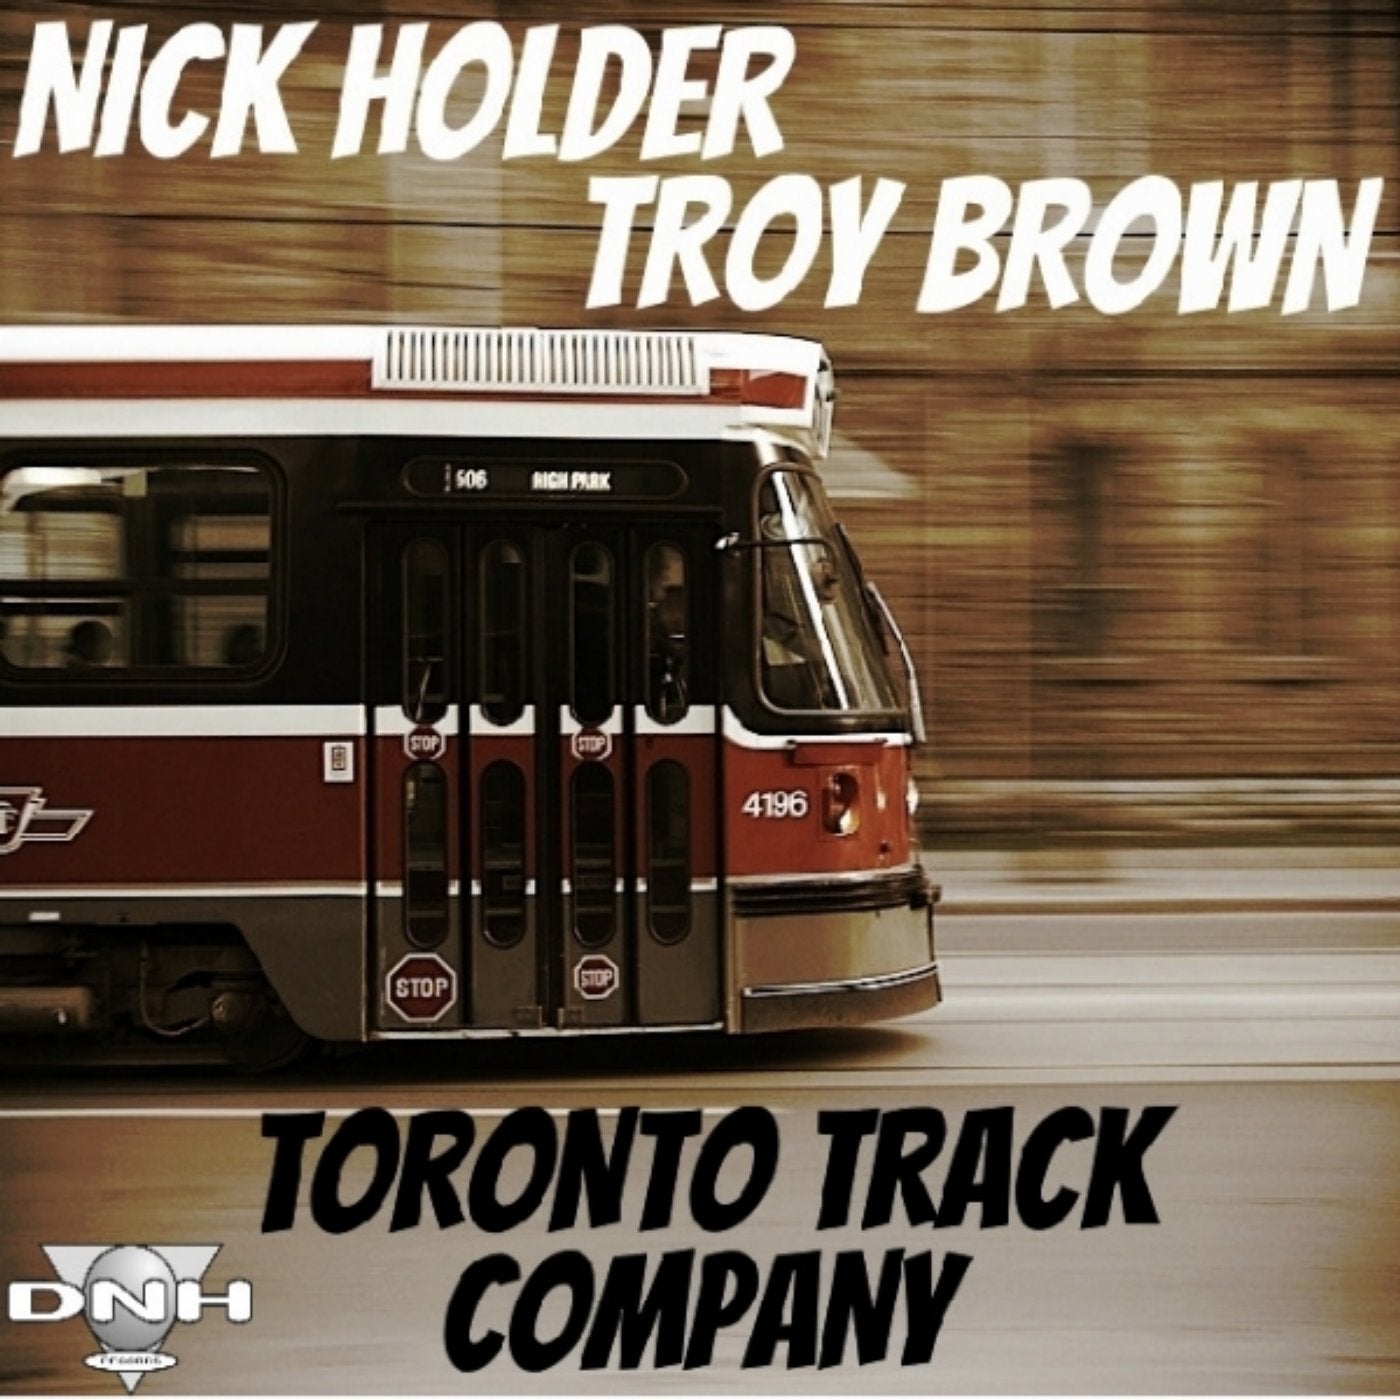 Toronto Track Company